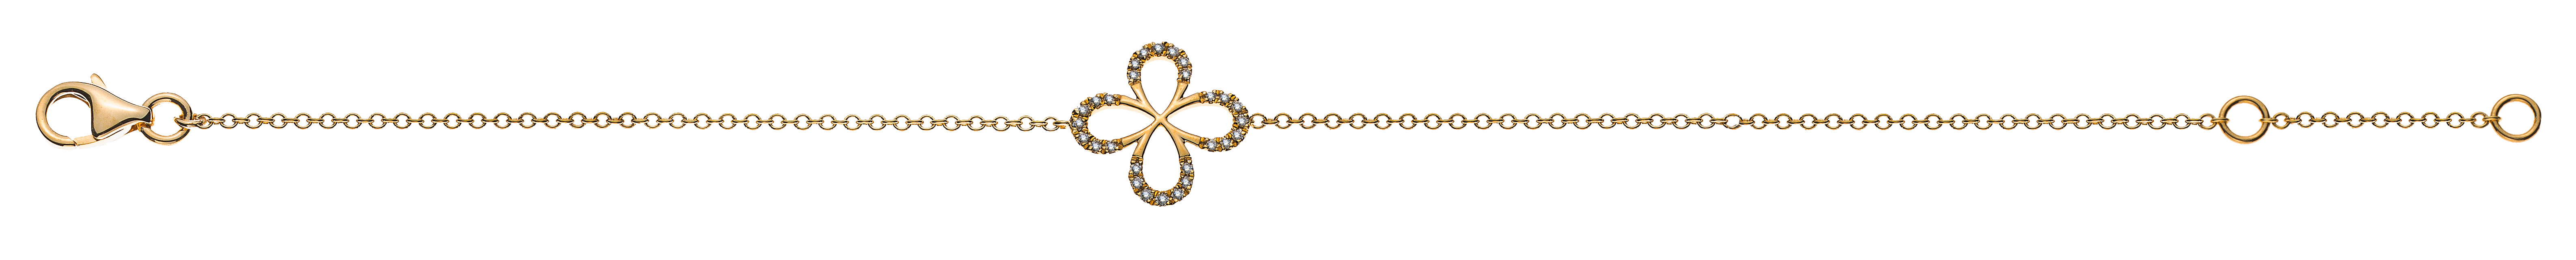 AURONOS Prestige Bracelet Round Anchor 18K Yellow Gold Diamonds 0.09ct 19cm